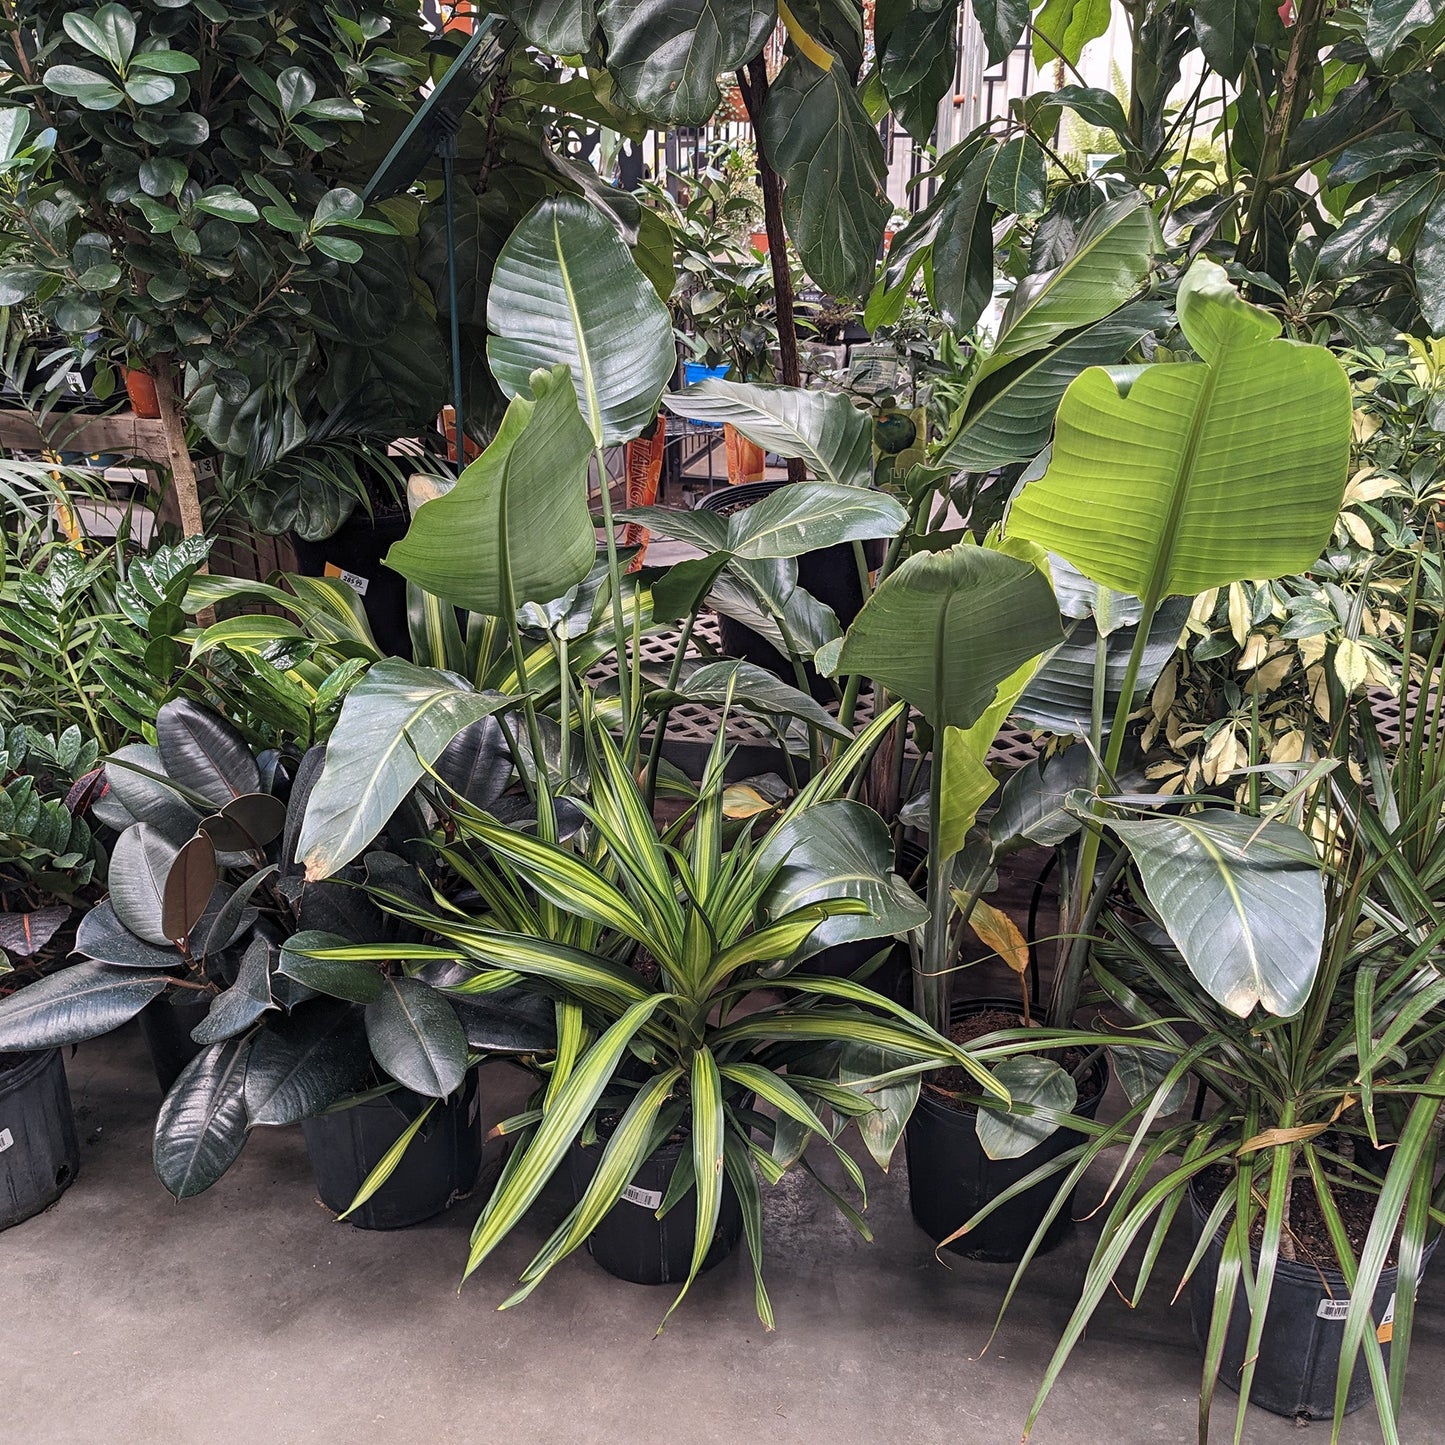 Assortment of tropical plants